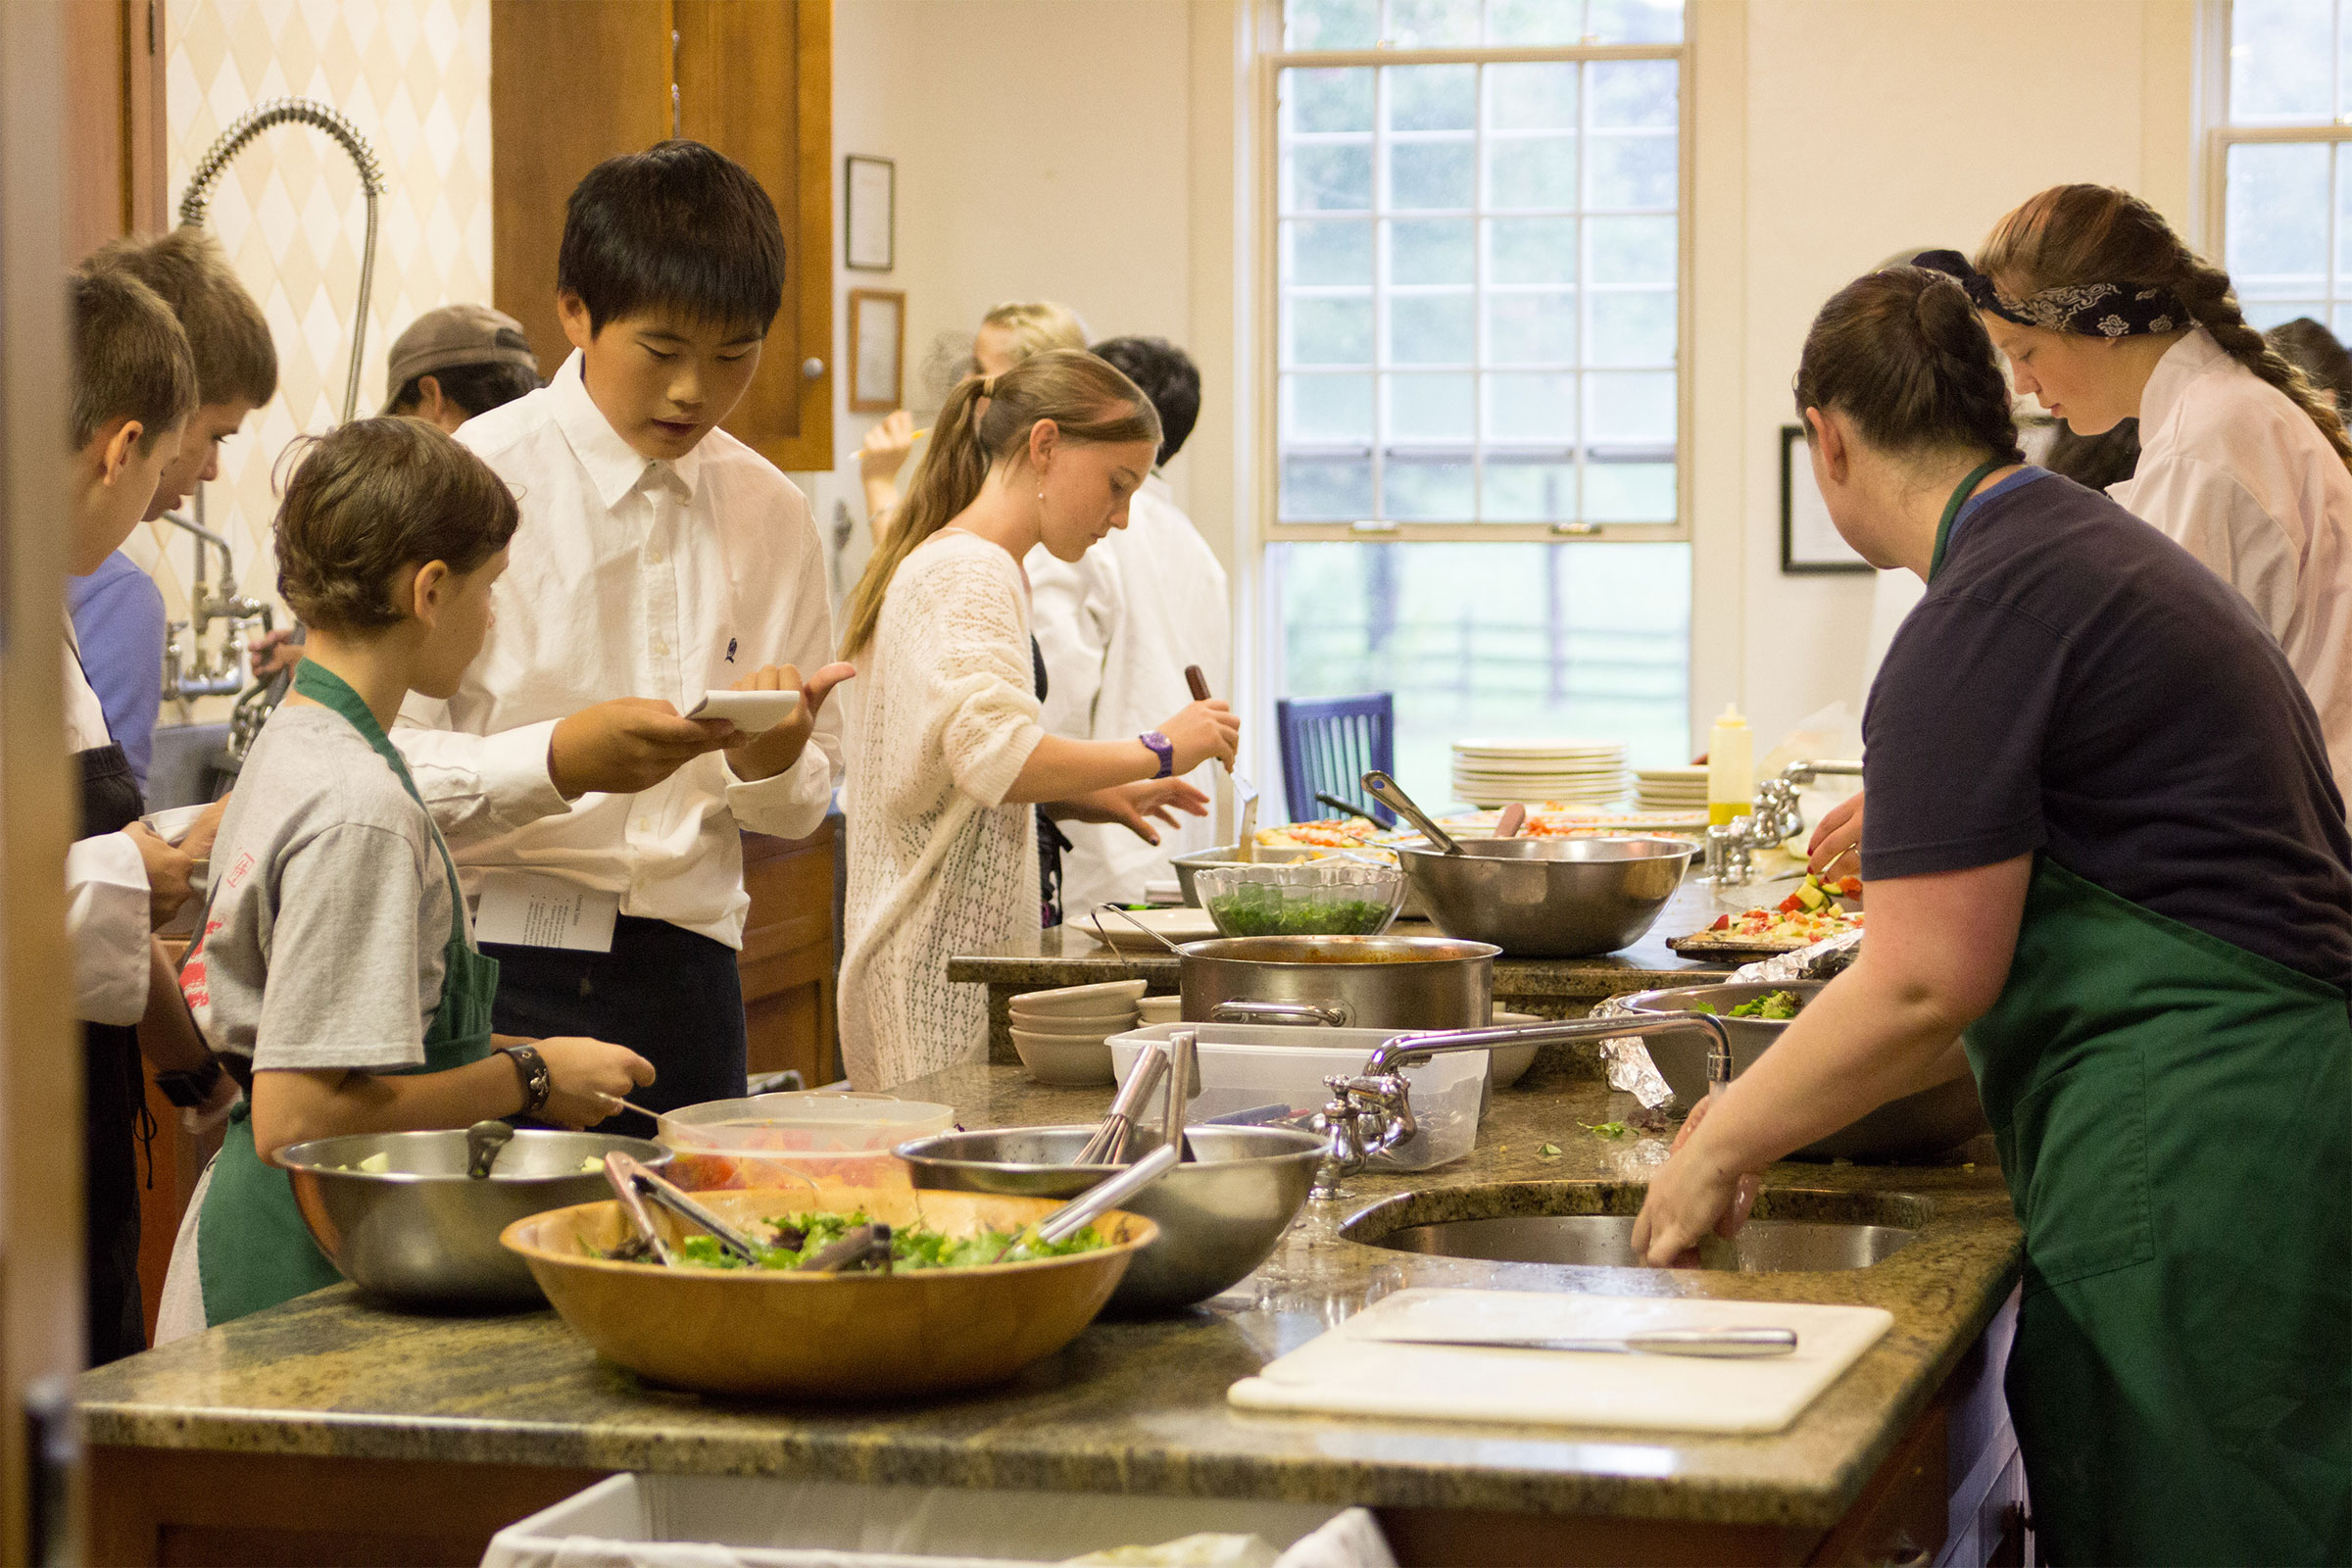 Montessori adolescent students working in a kitchen